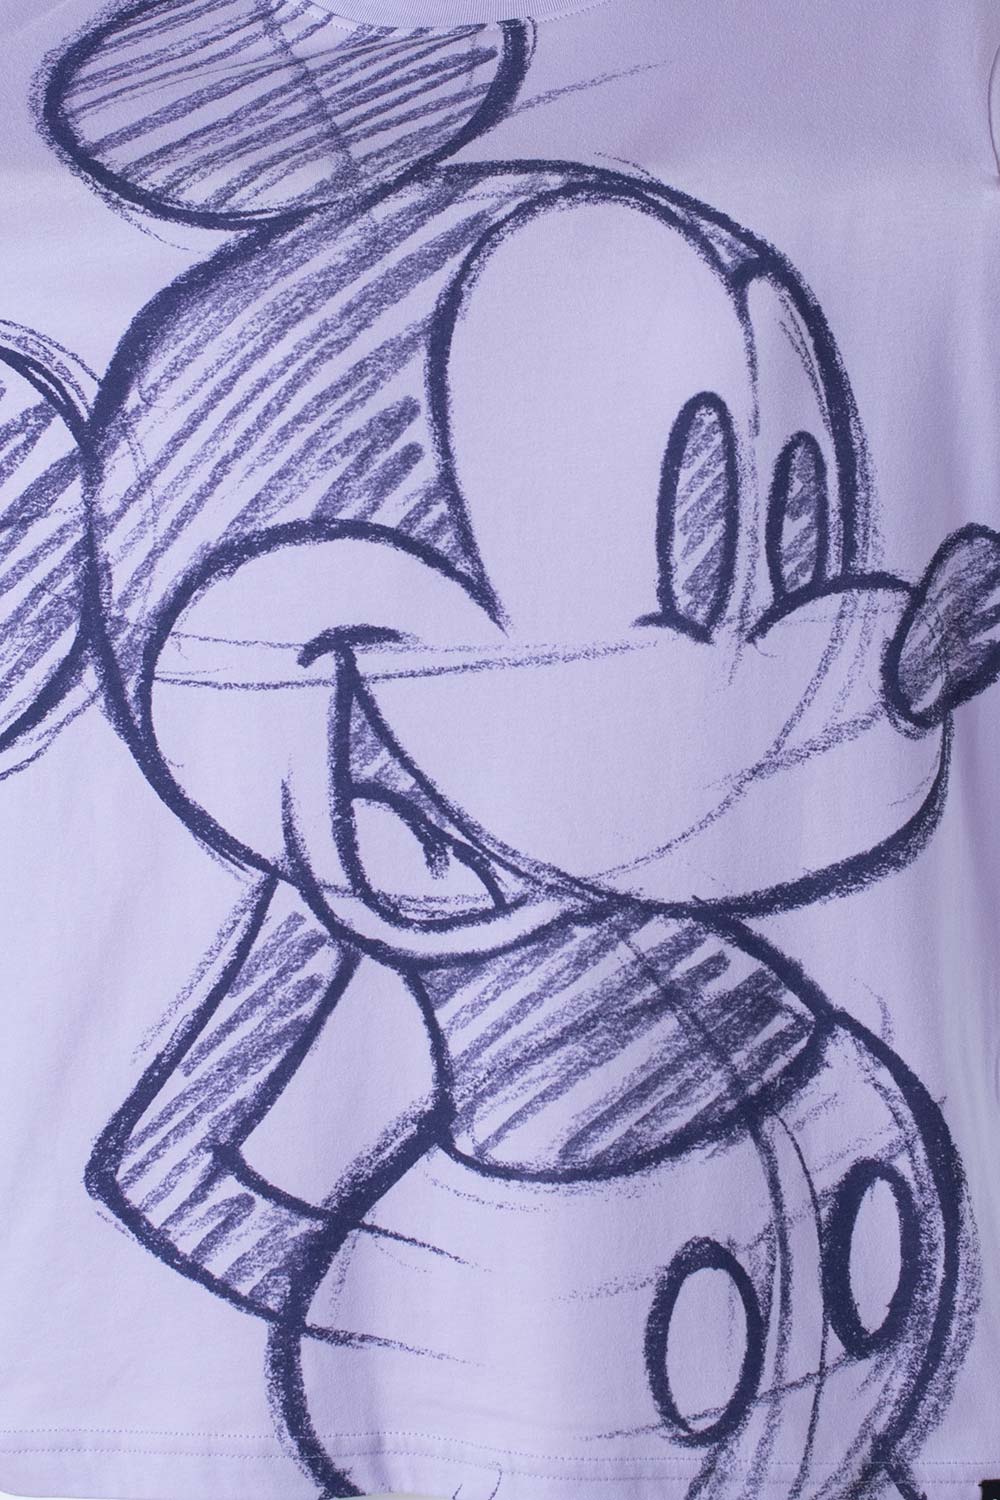 Disney Camiseta clásica de manga corta de Mickey a cuadros para mujer